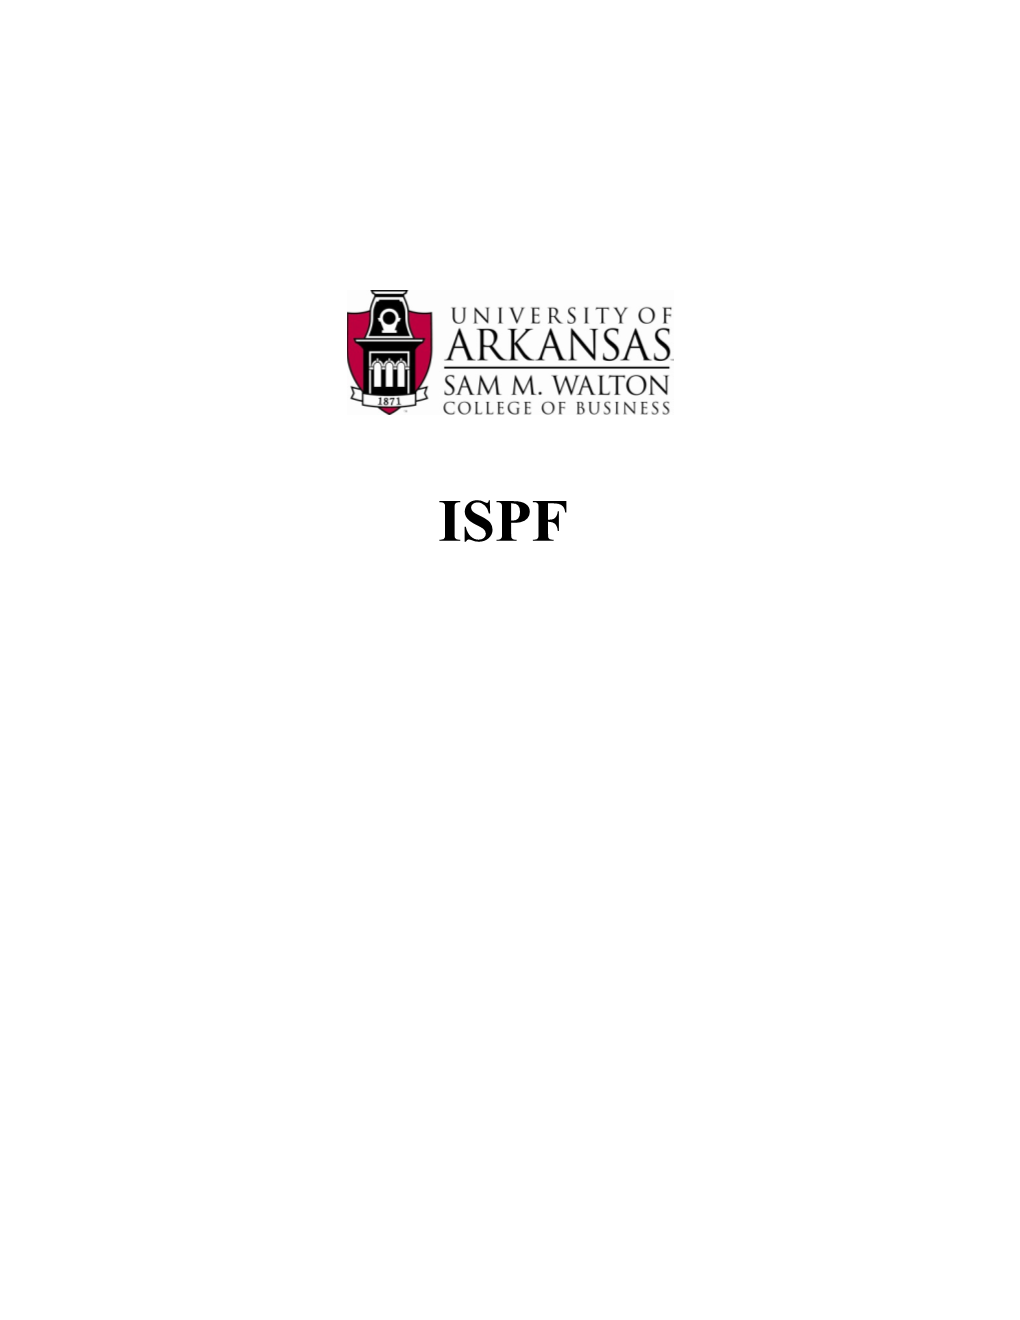 Interactive Program Development Facility) ISPF (Interactive Program Development Facility